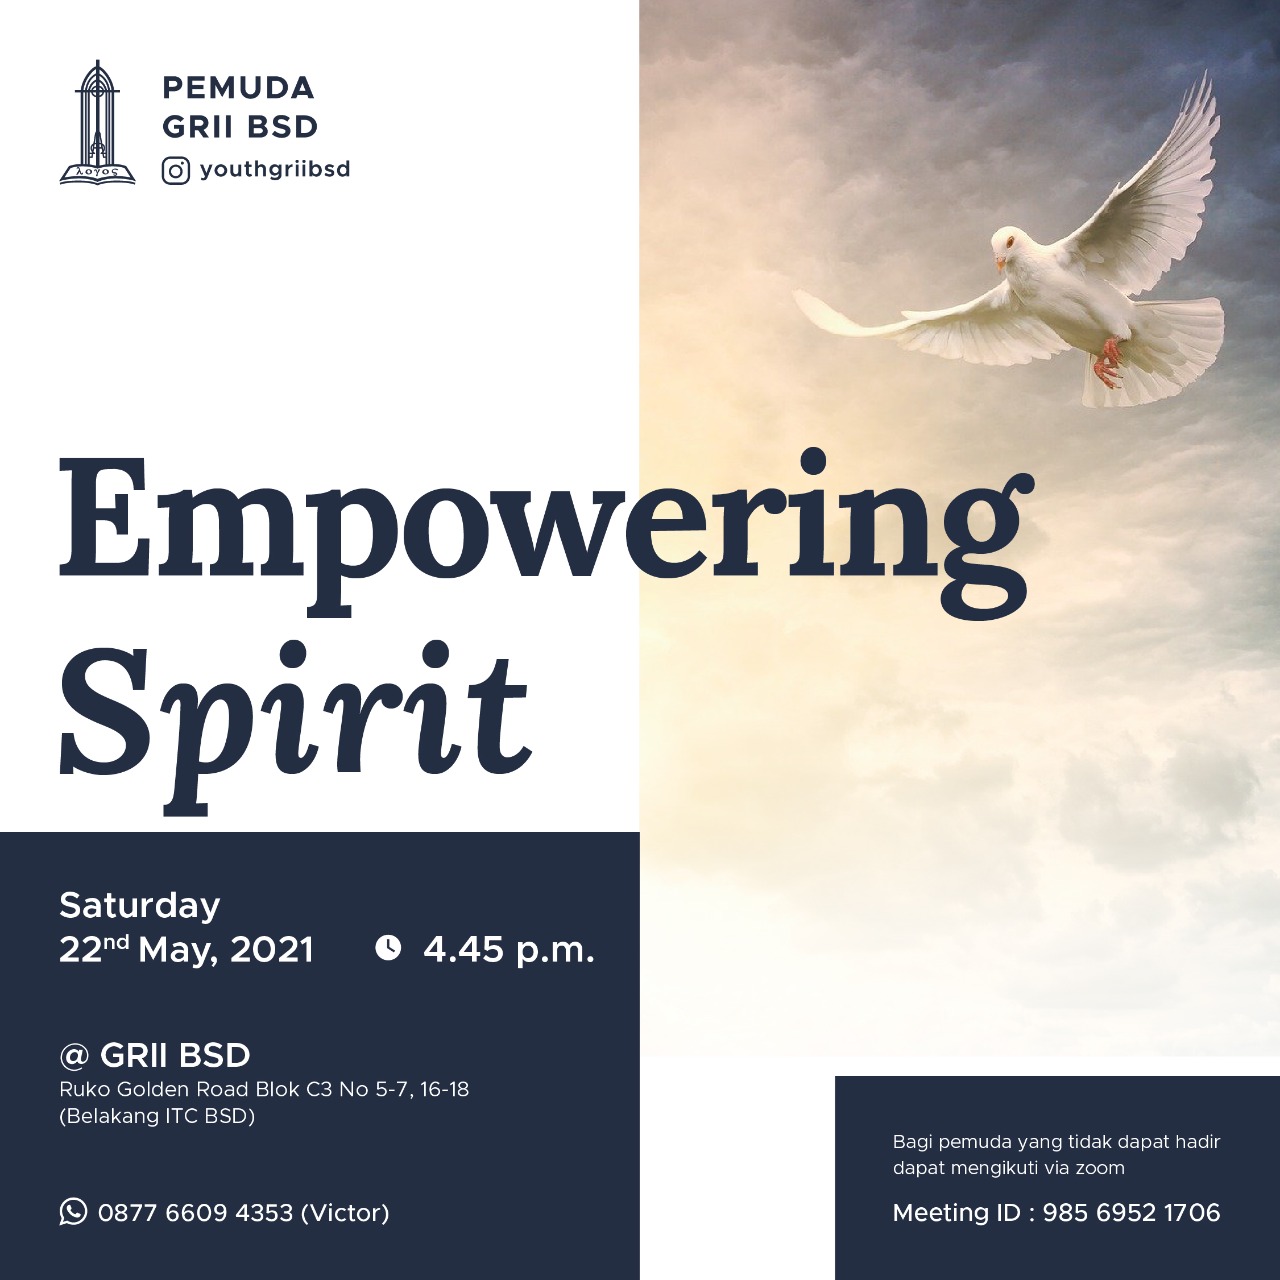 Empowering Spirit